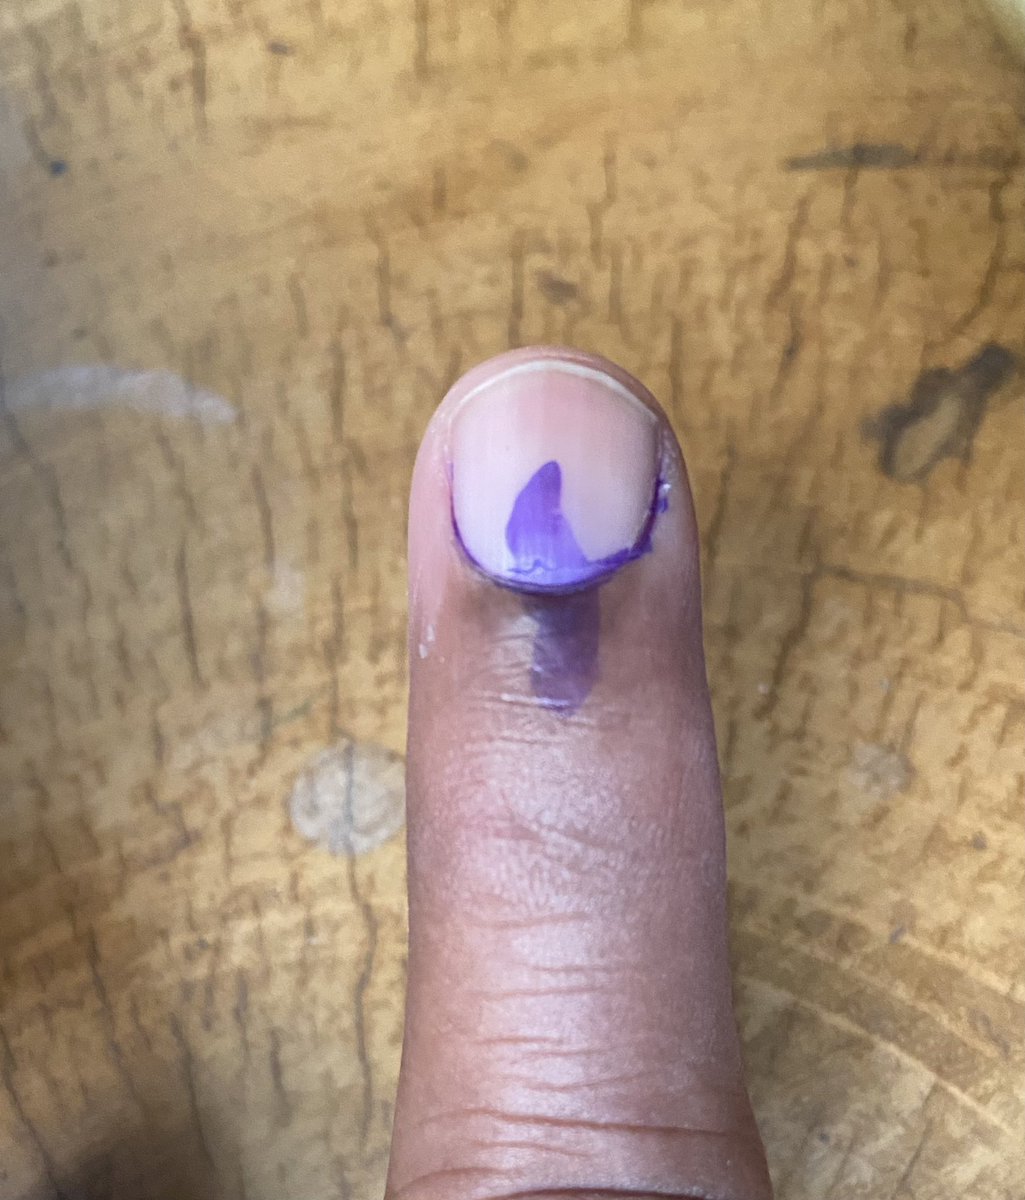 I did my duty. 
#KarnatakaAssemblyElection2023 #KarnatakaElections #KarnatakaVotes #election2023 #ElectionDay #myduty